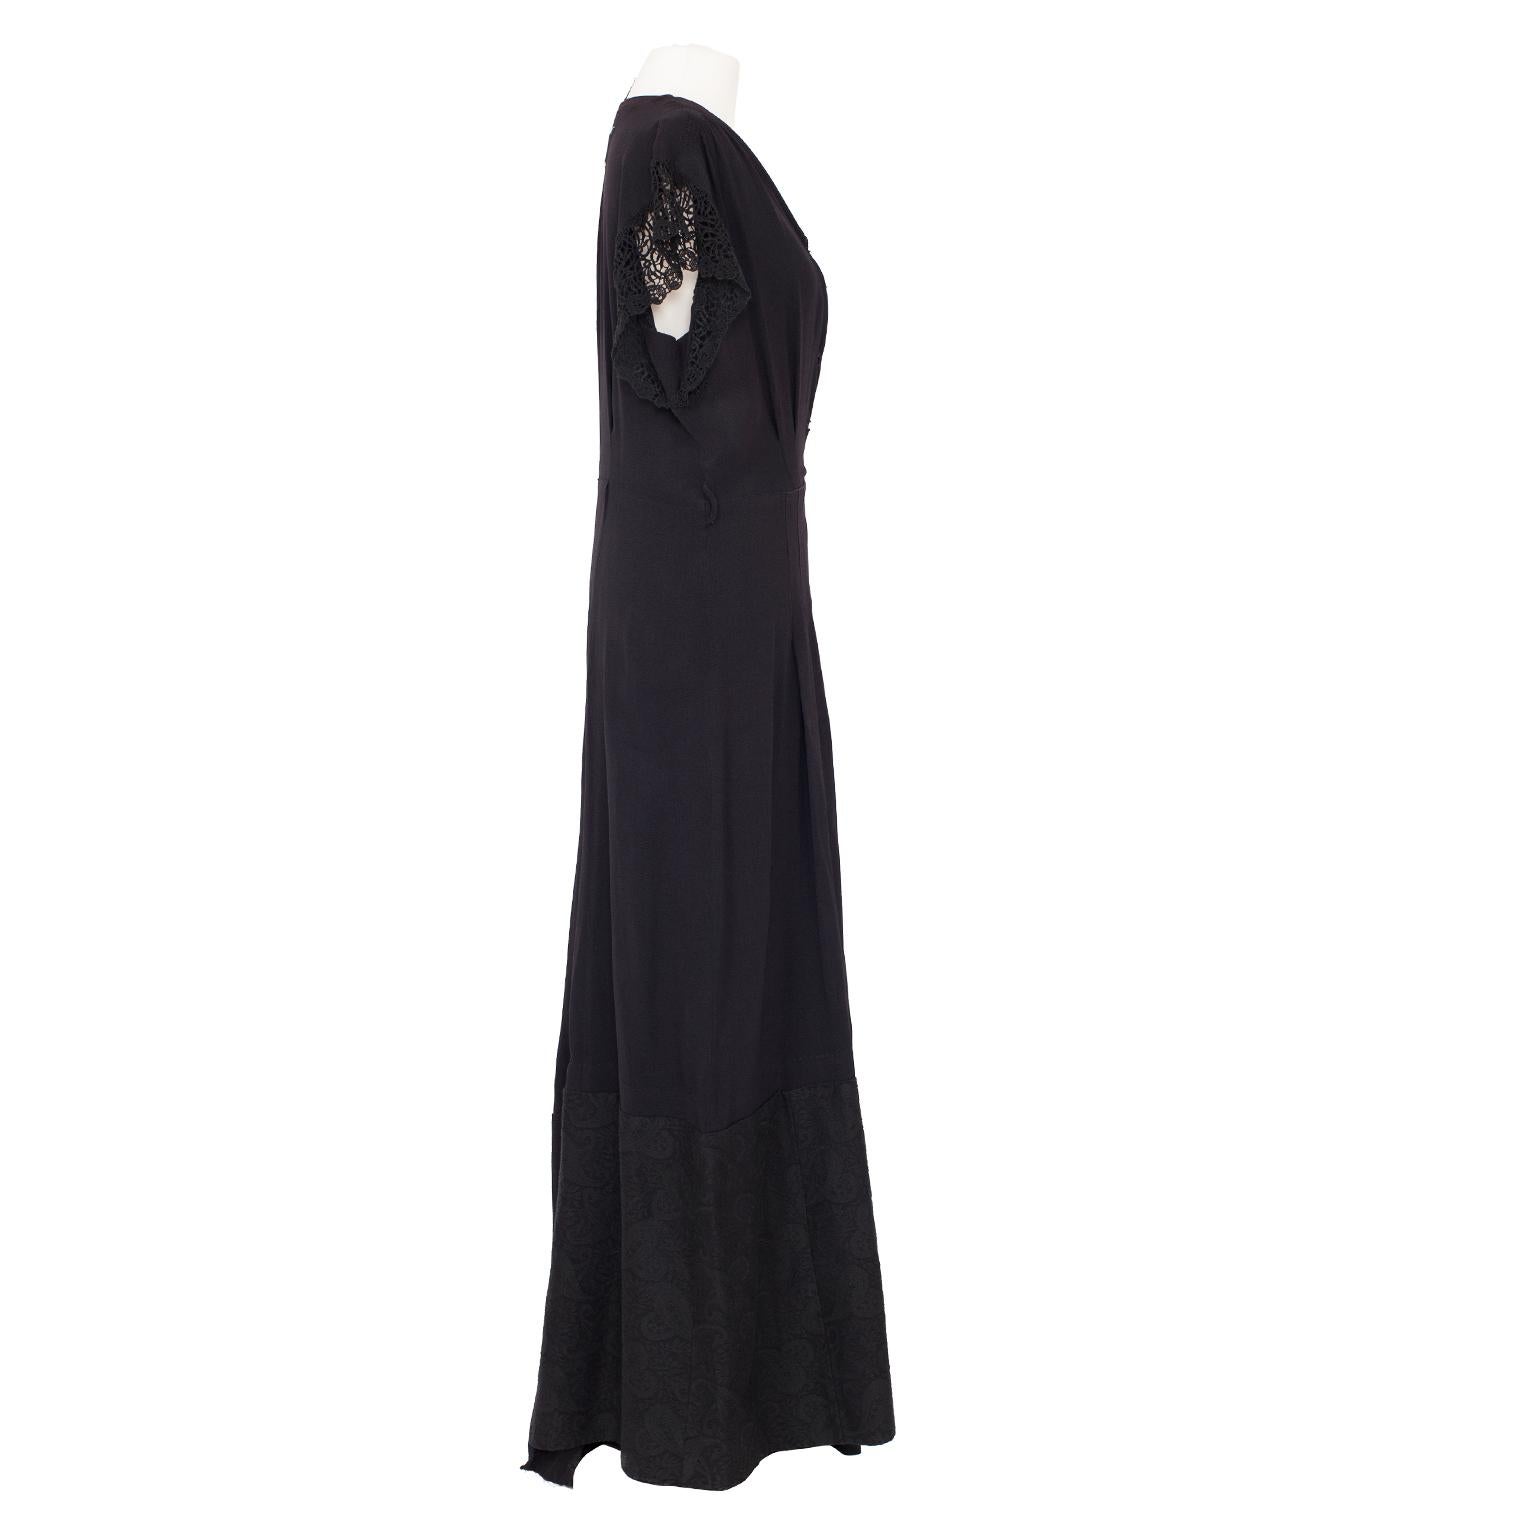 Martin Margiela Artisanal Deconstructed Black Dress, 1993 / SS 1994 4